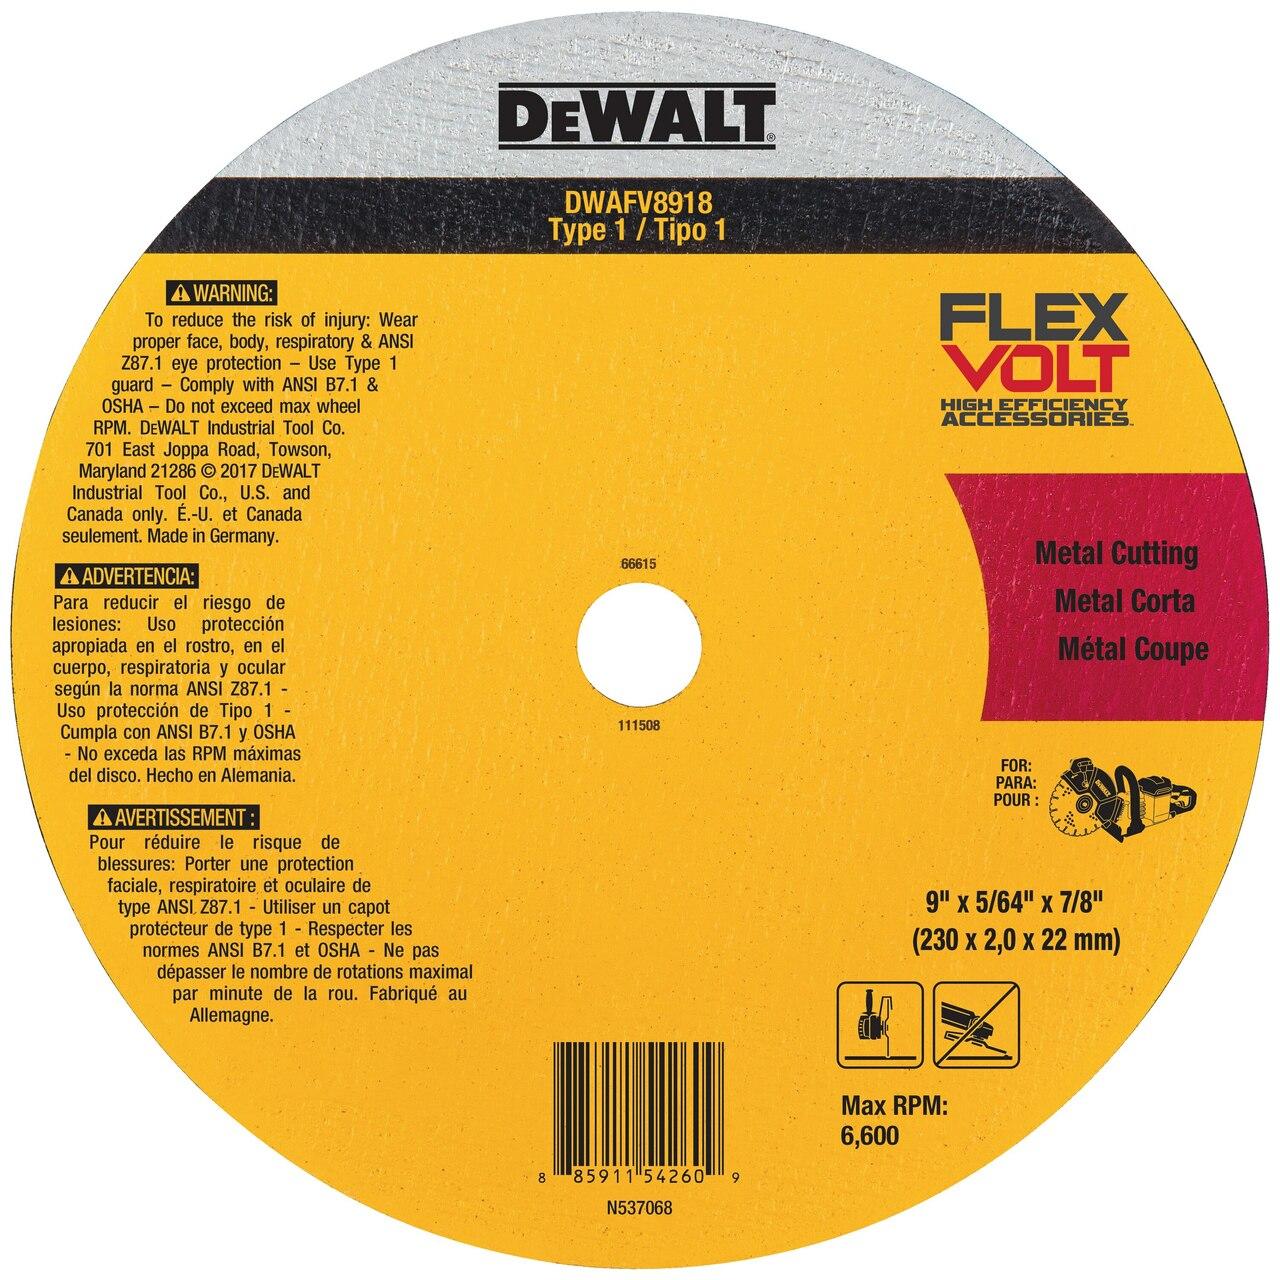 DeWalt FlexVolt Ceramic Metal Cutoff Wheel Chas. E. Phipps